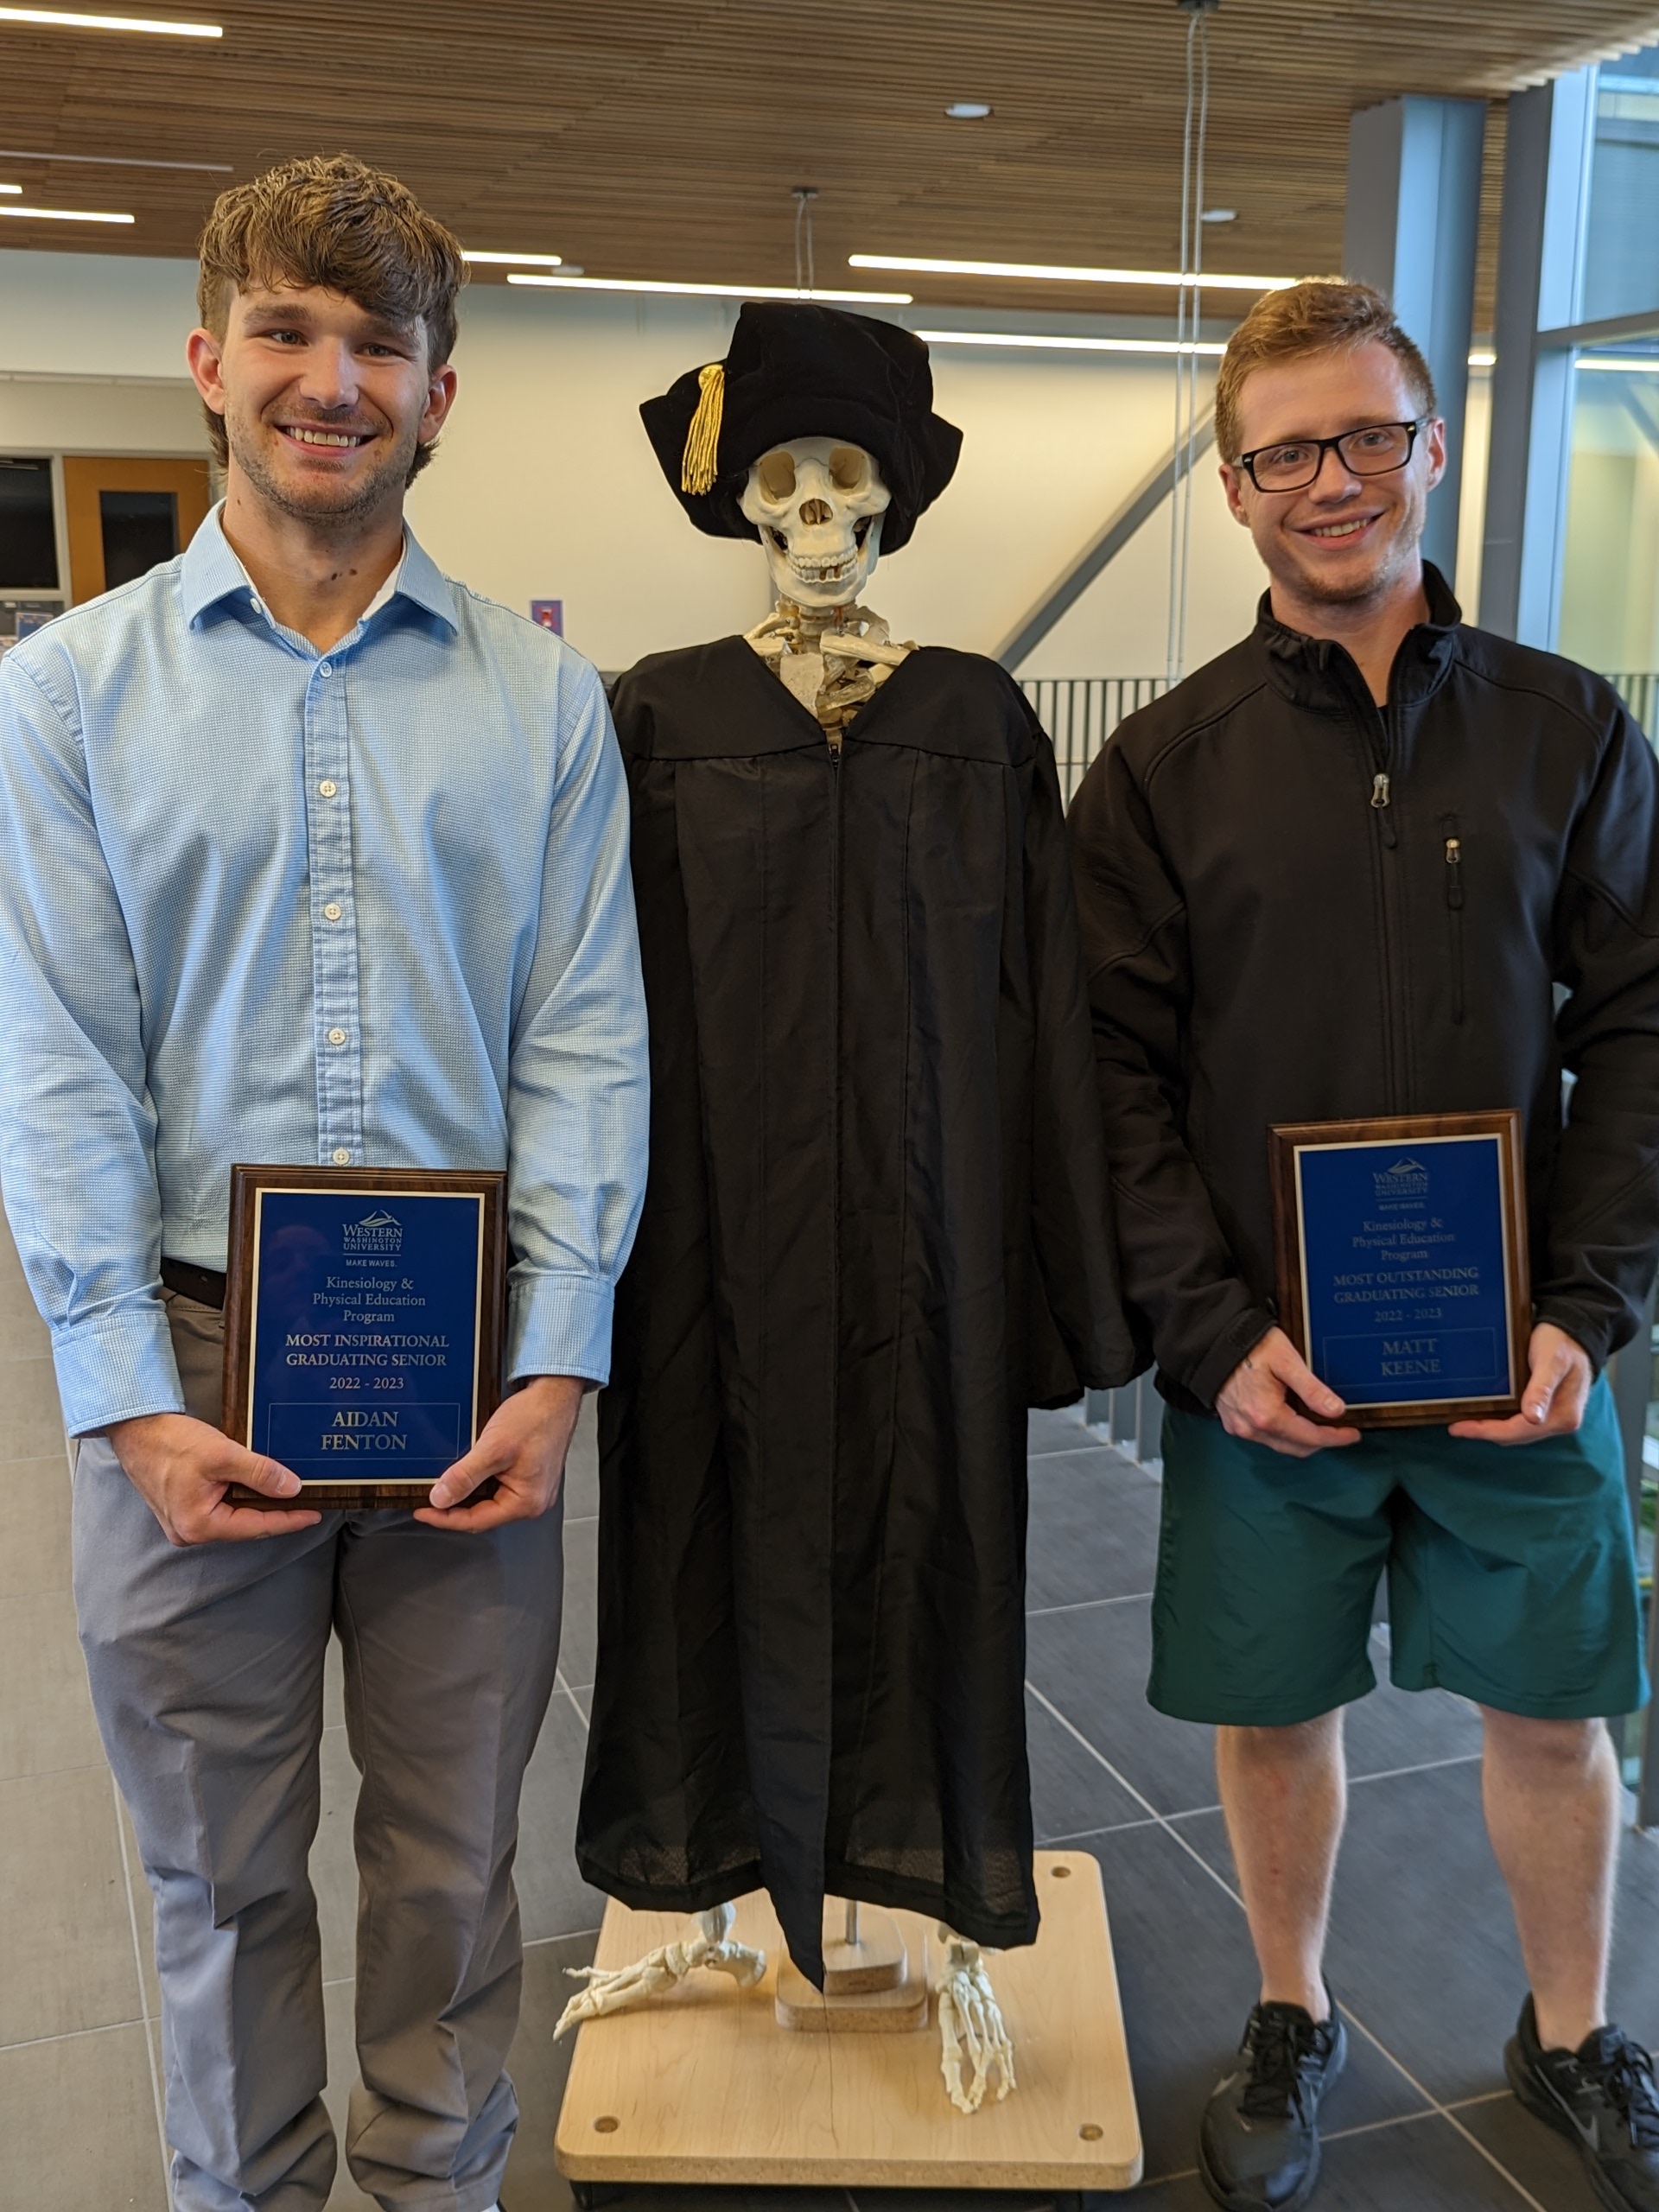 Aidan, Matt and Skeleton standing in hallway with awards